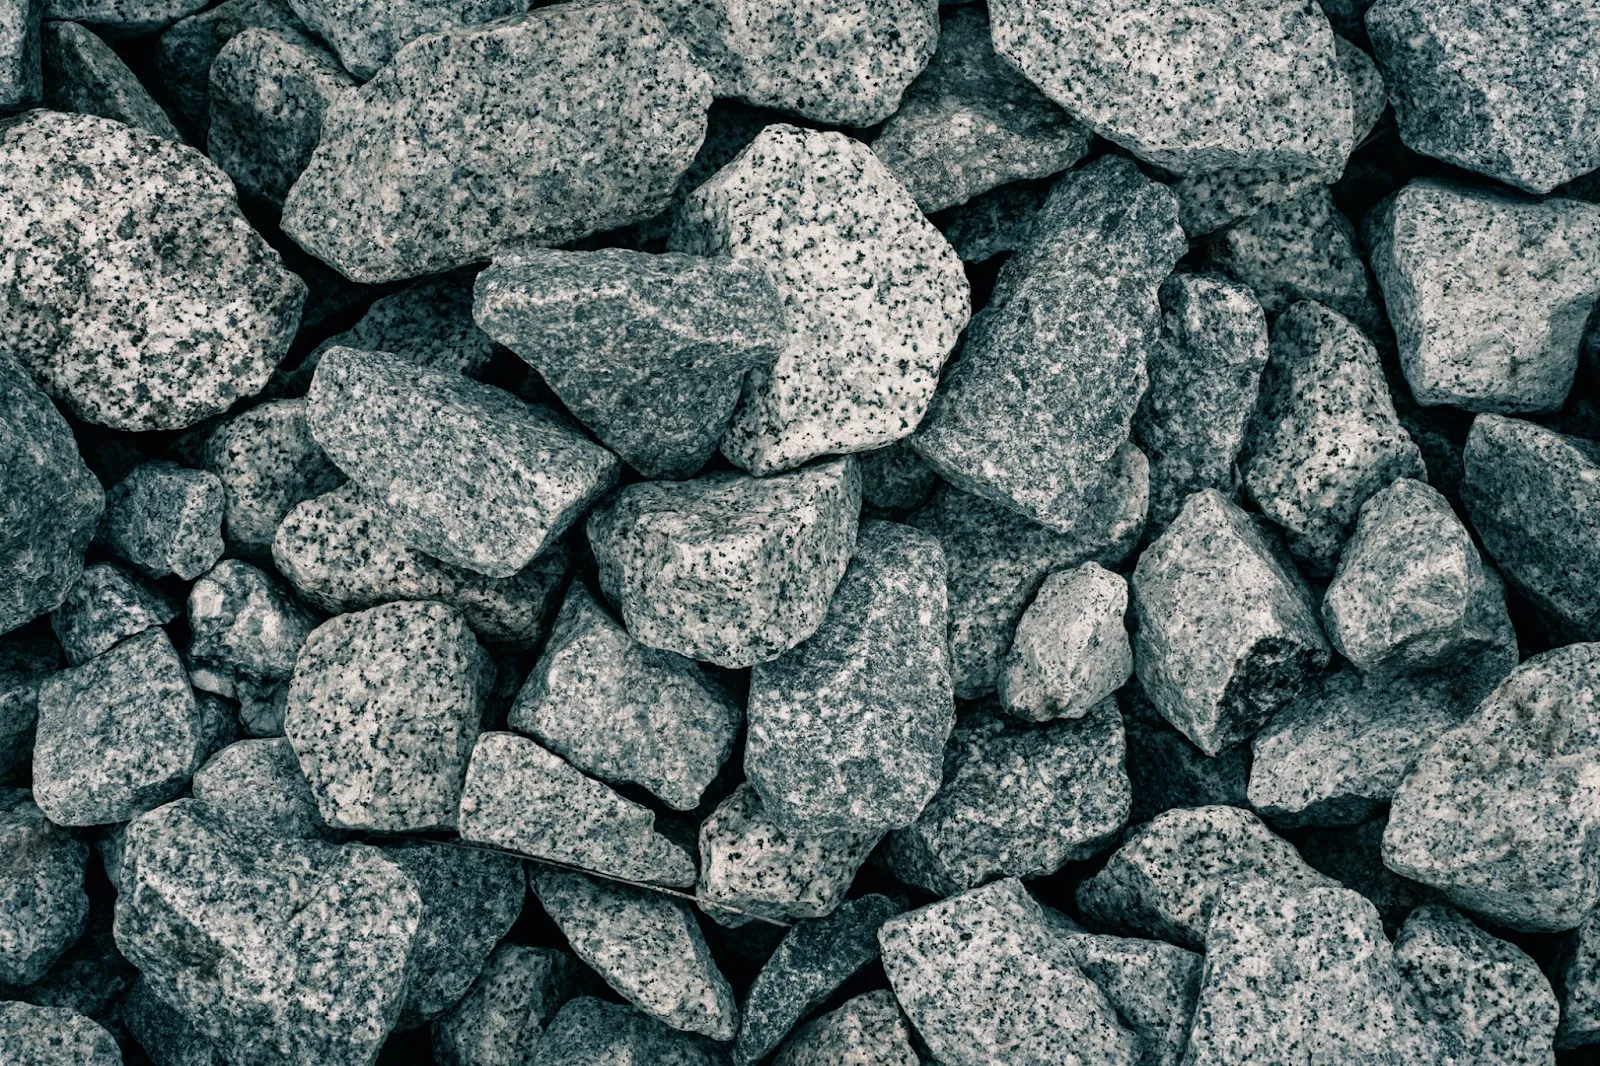 Rock 'n' Roll: The Obliterating Saga of Stone Crushers in Mining